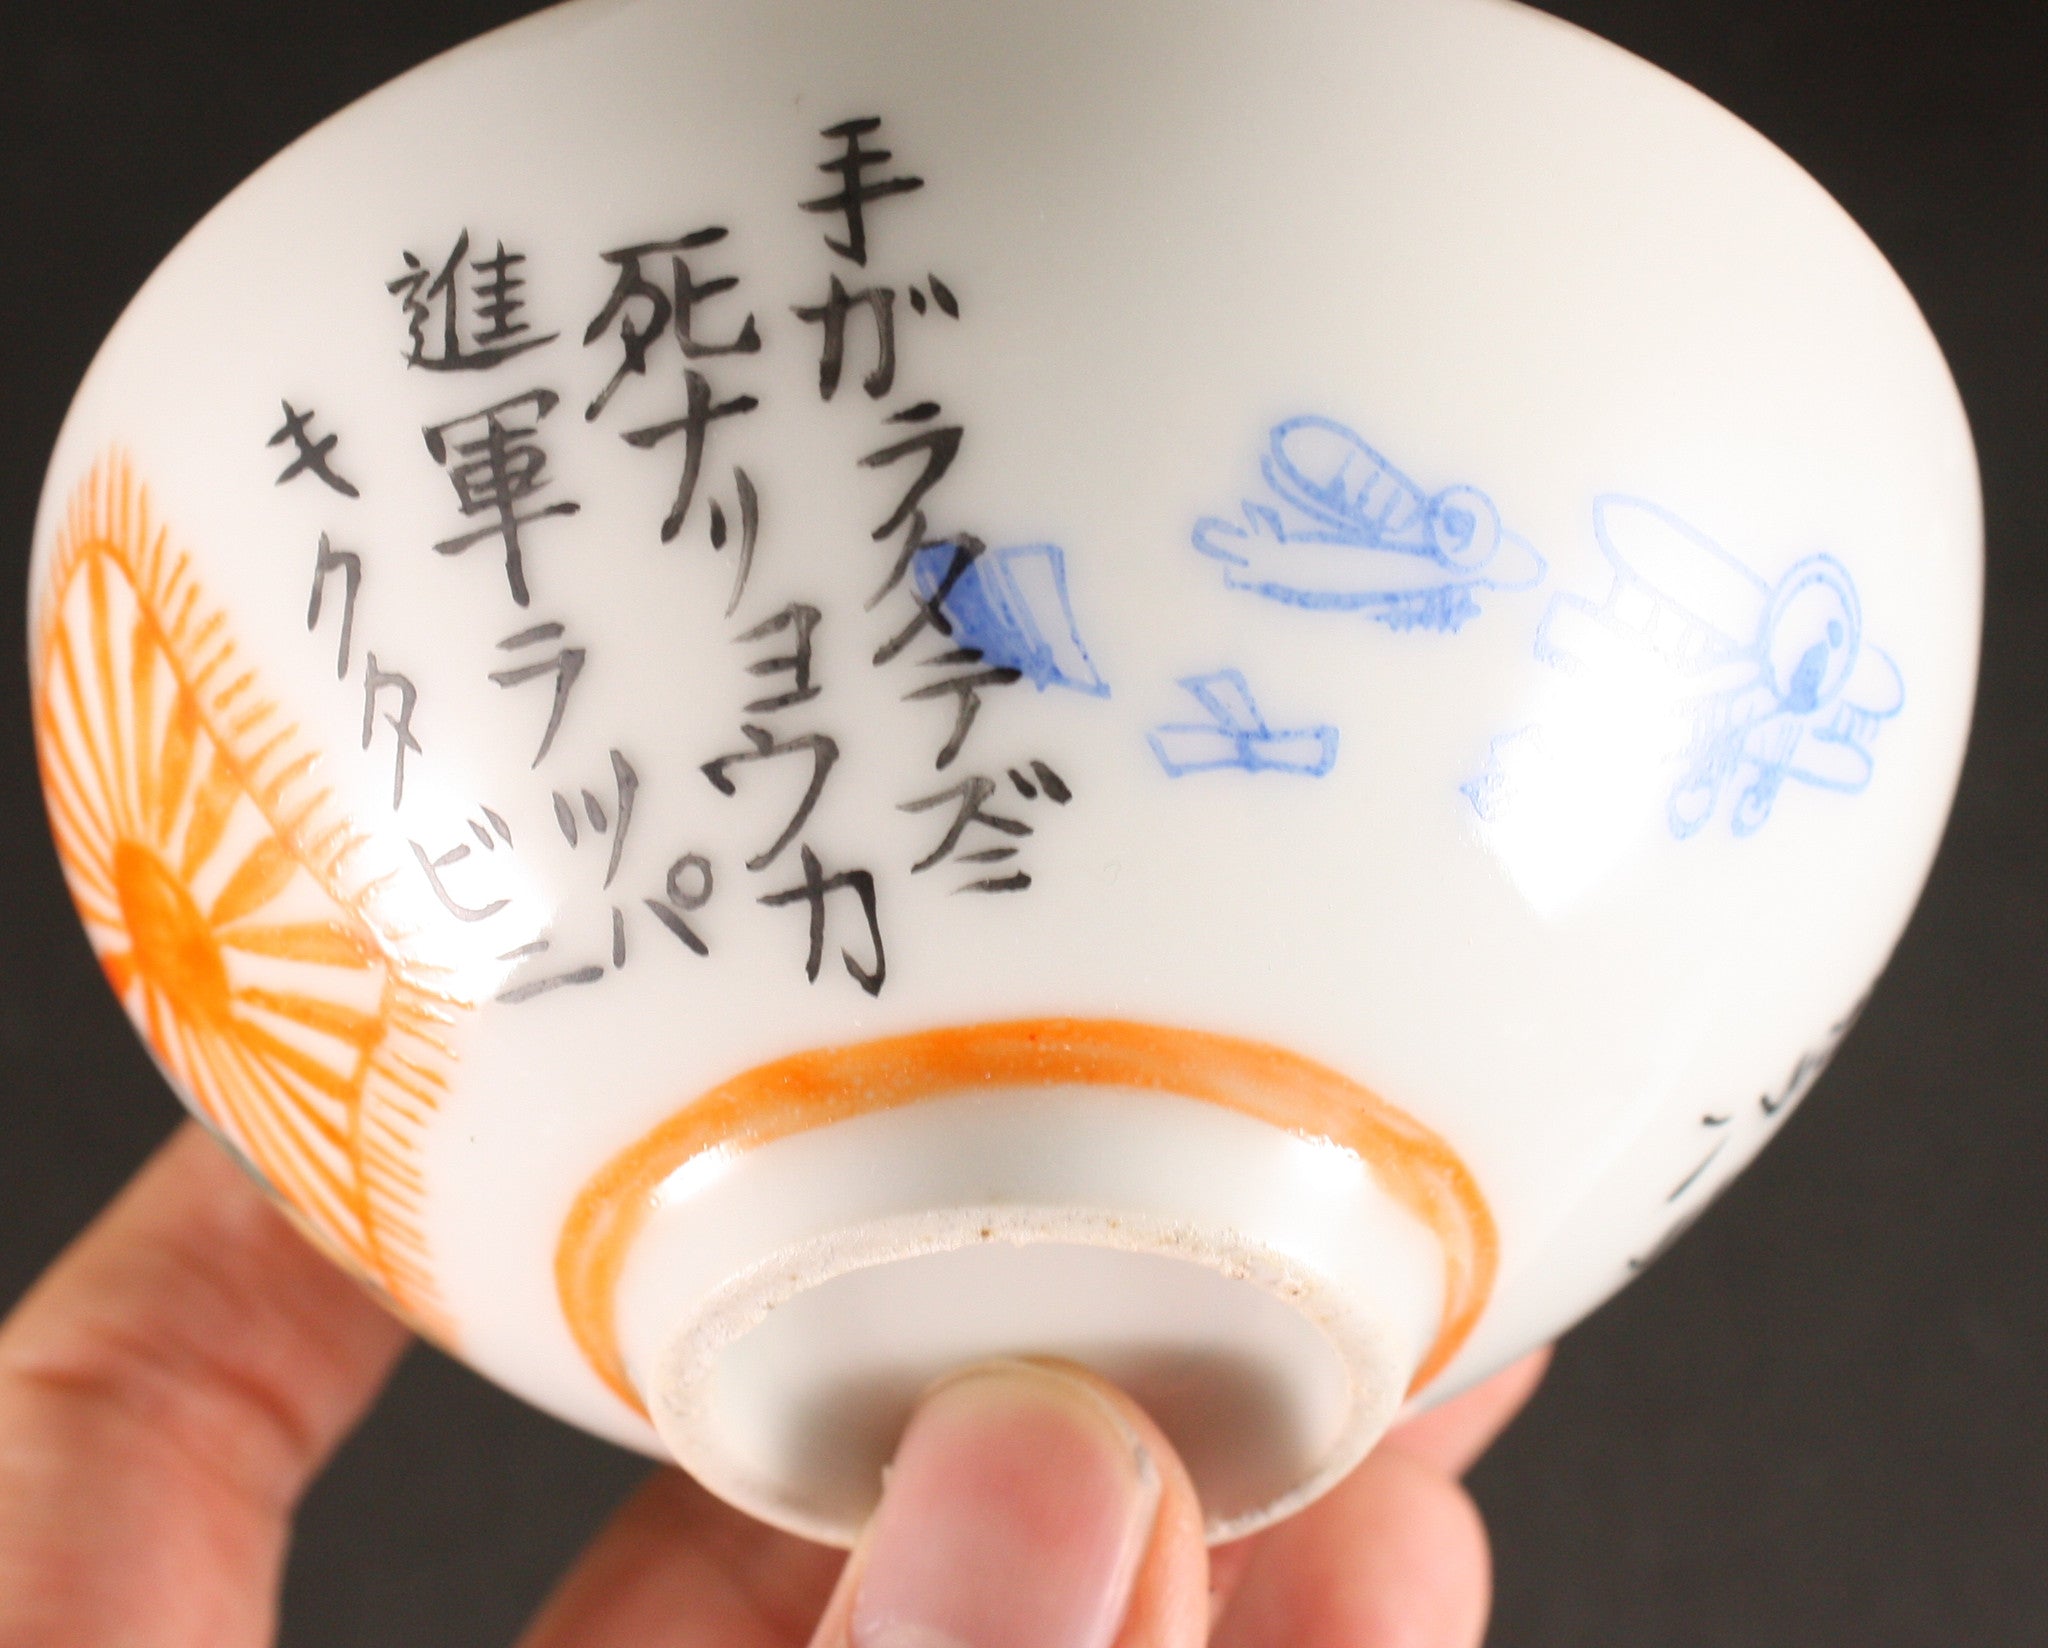 Antique Japanese Military Themed Children's Rice Bowl